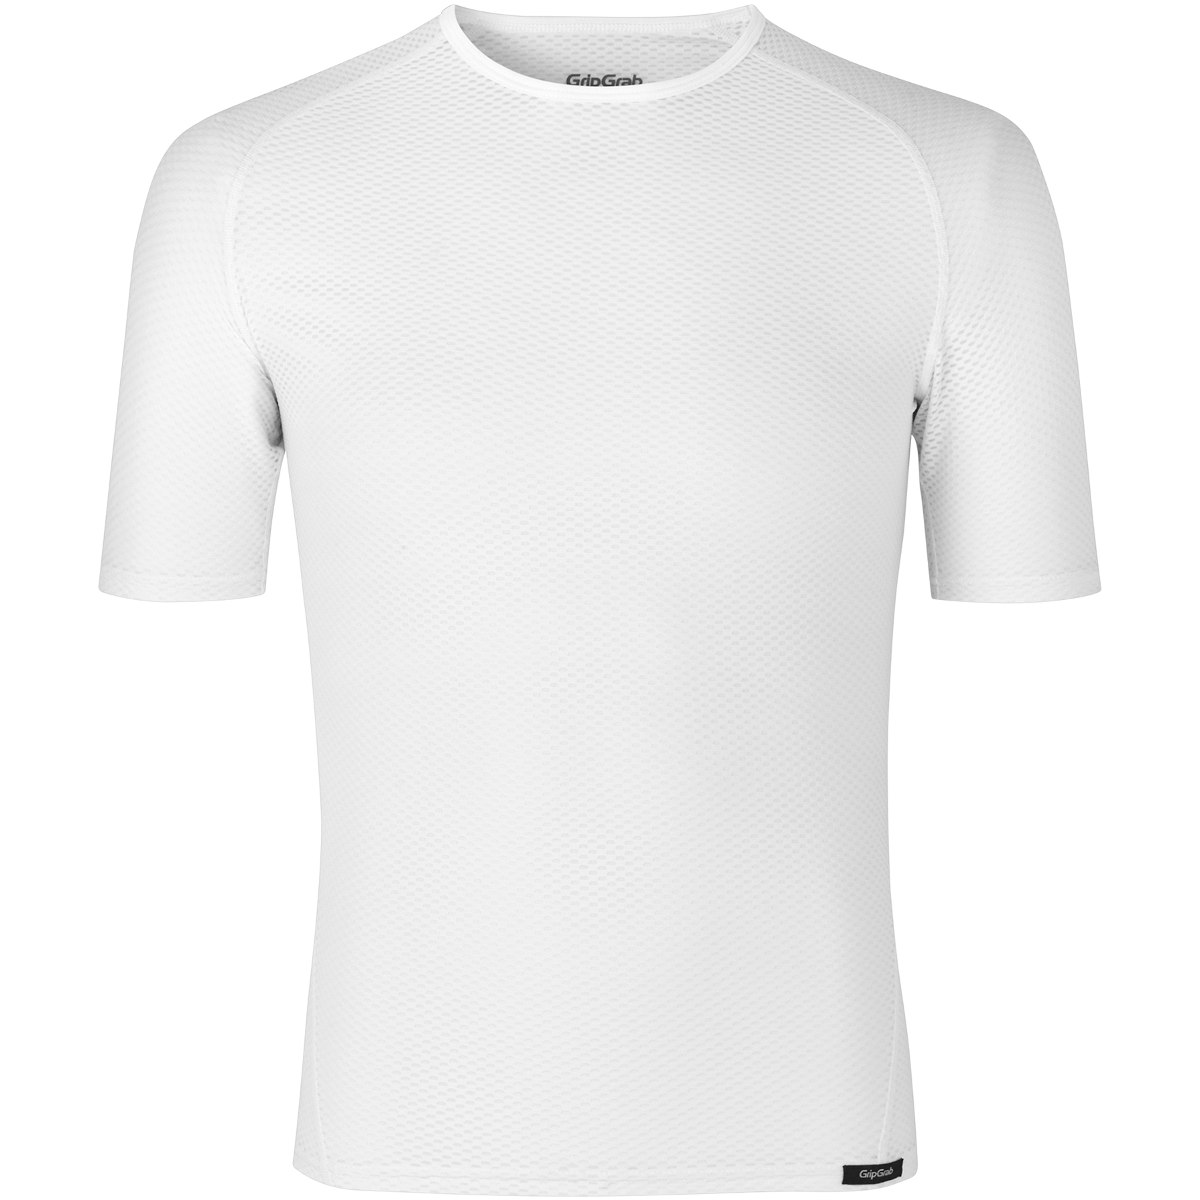 Productfoto van GripGrab Ultralight Mesh Onderhemd met Korte Mouwen - White